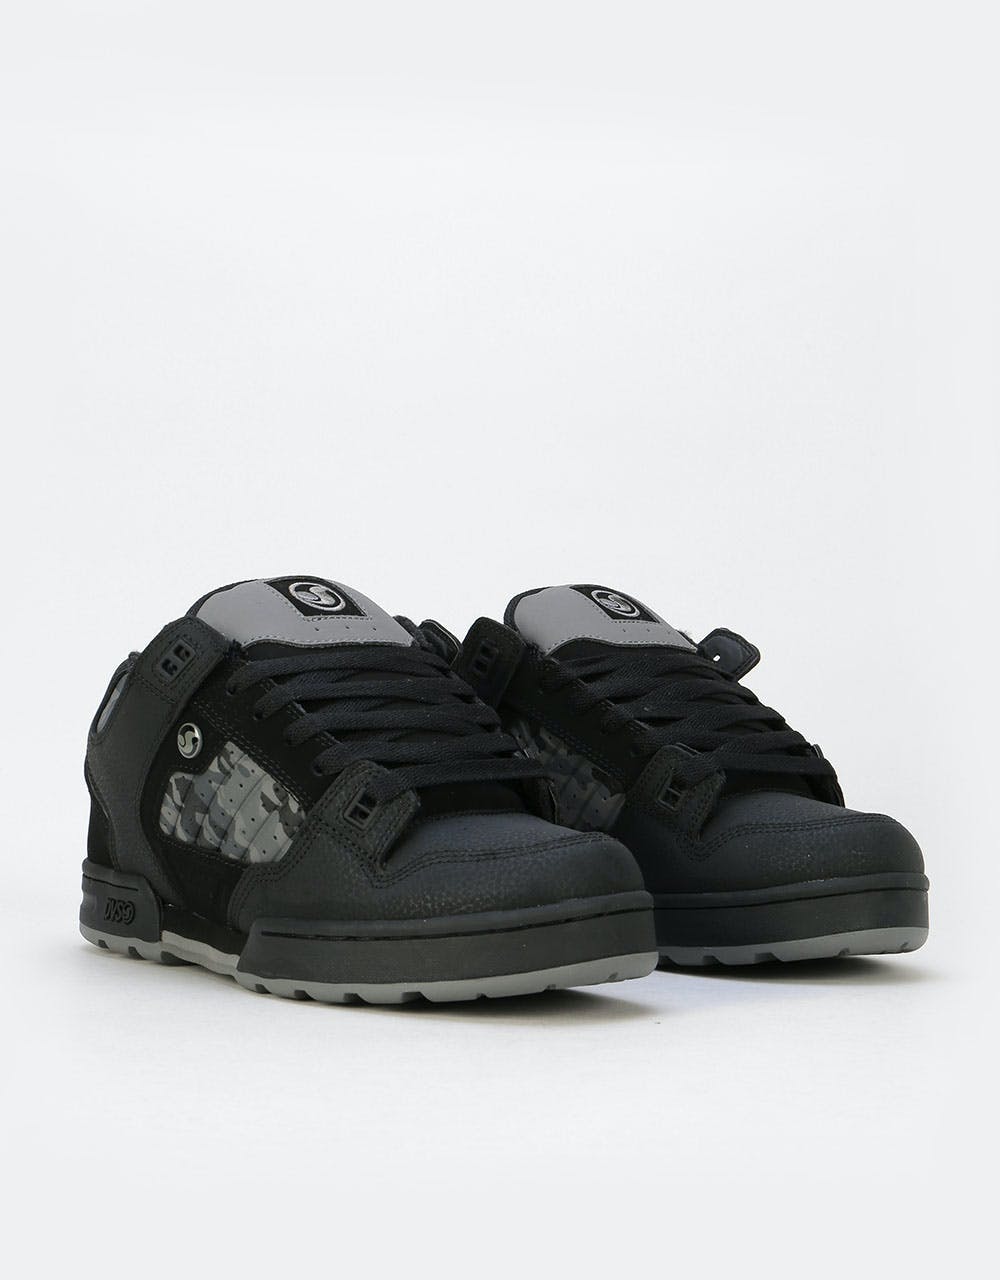 DVS Militia Snow Boot - Black/Camo Leather